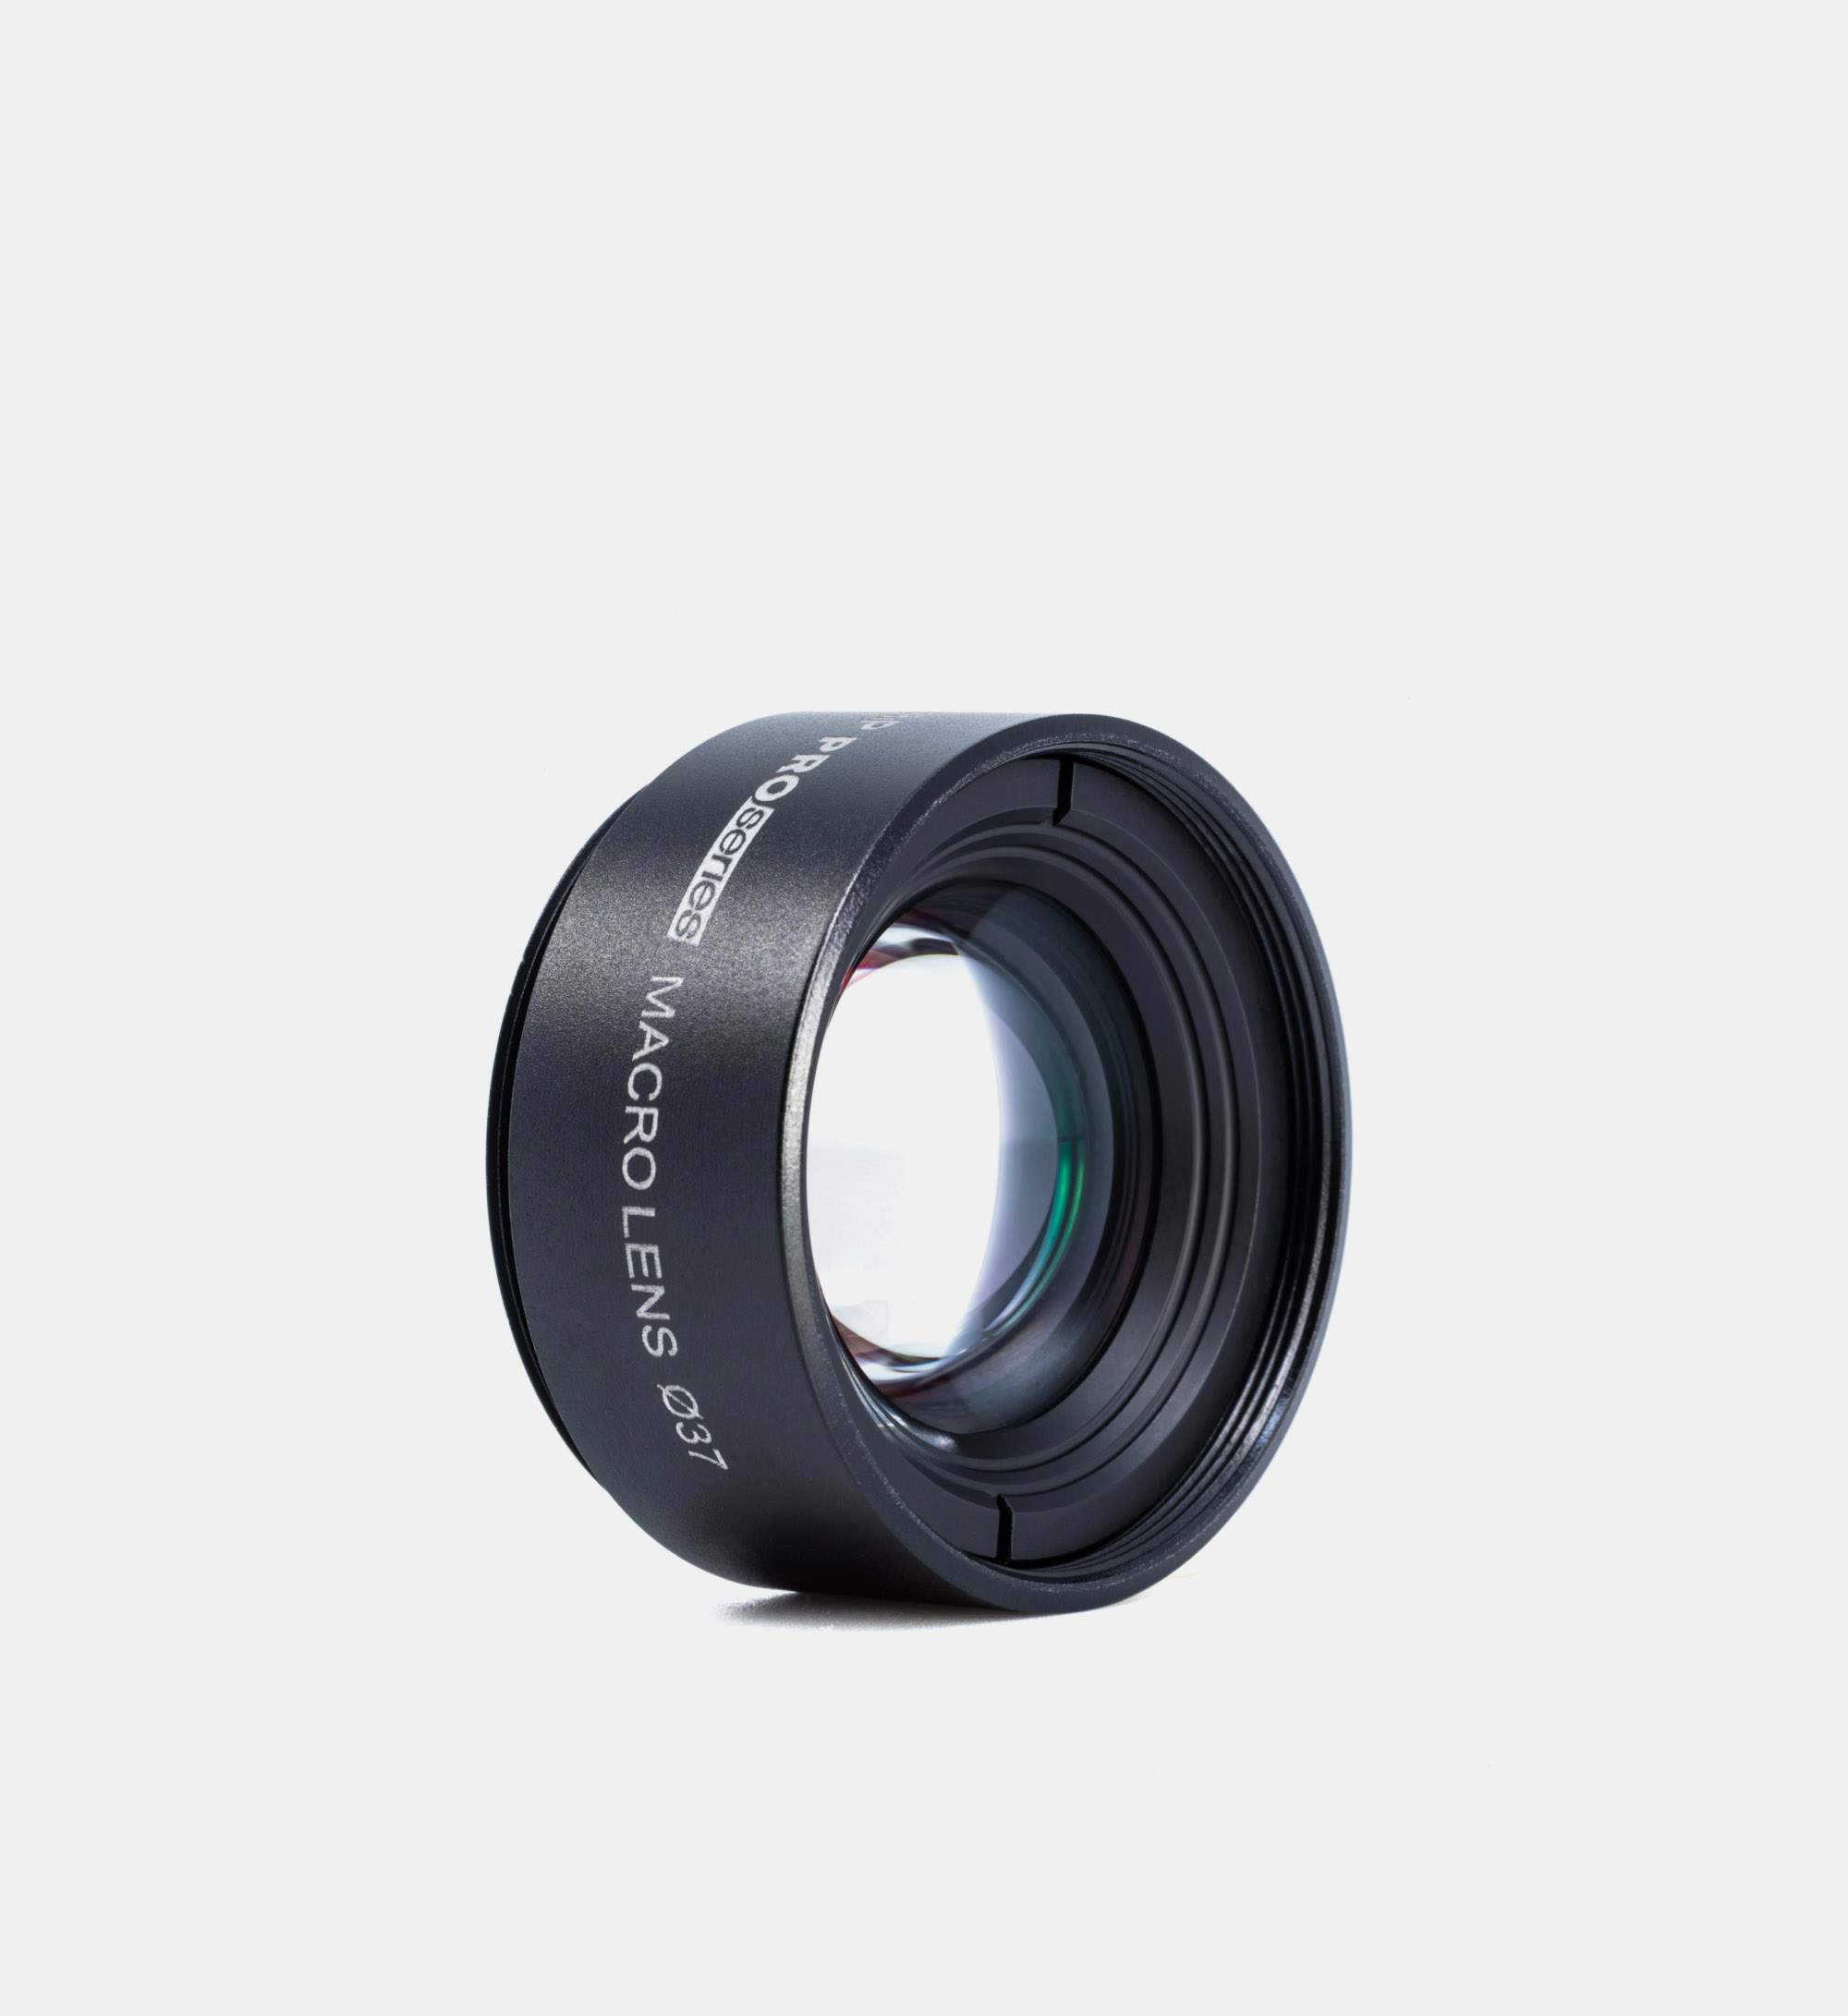 Macro Lens for iPhone - Beastgrip